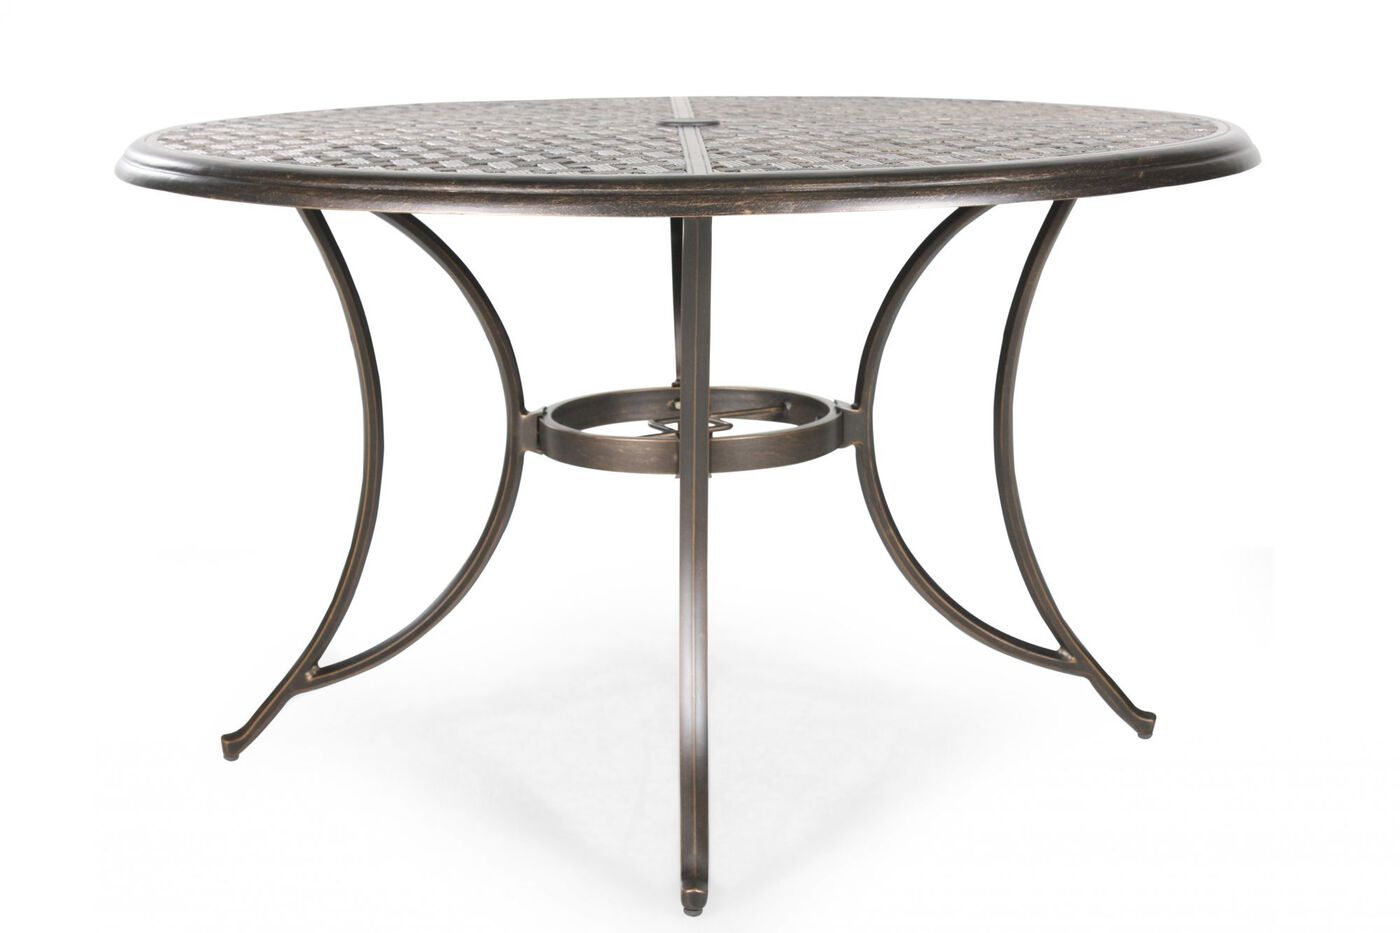 Lattice Patterned Aluminum Round Patio Dining Table in Dark Brown